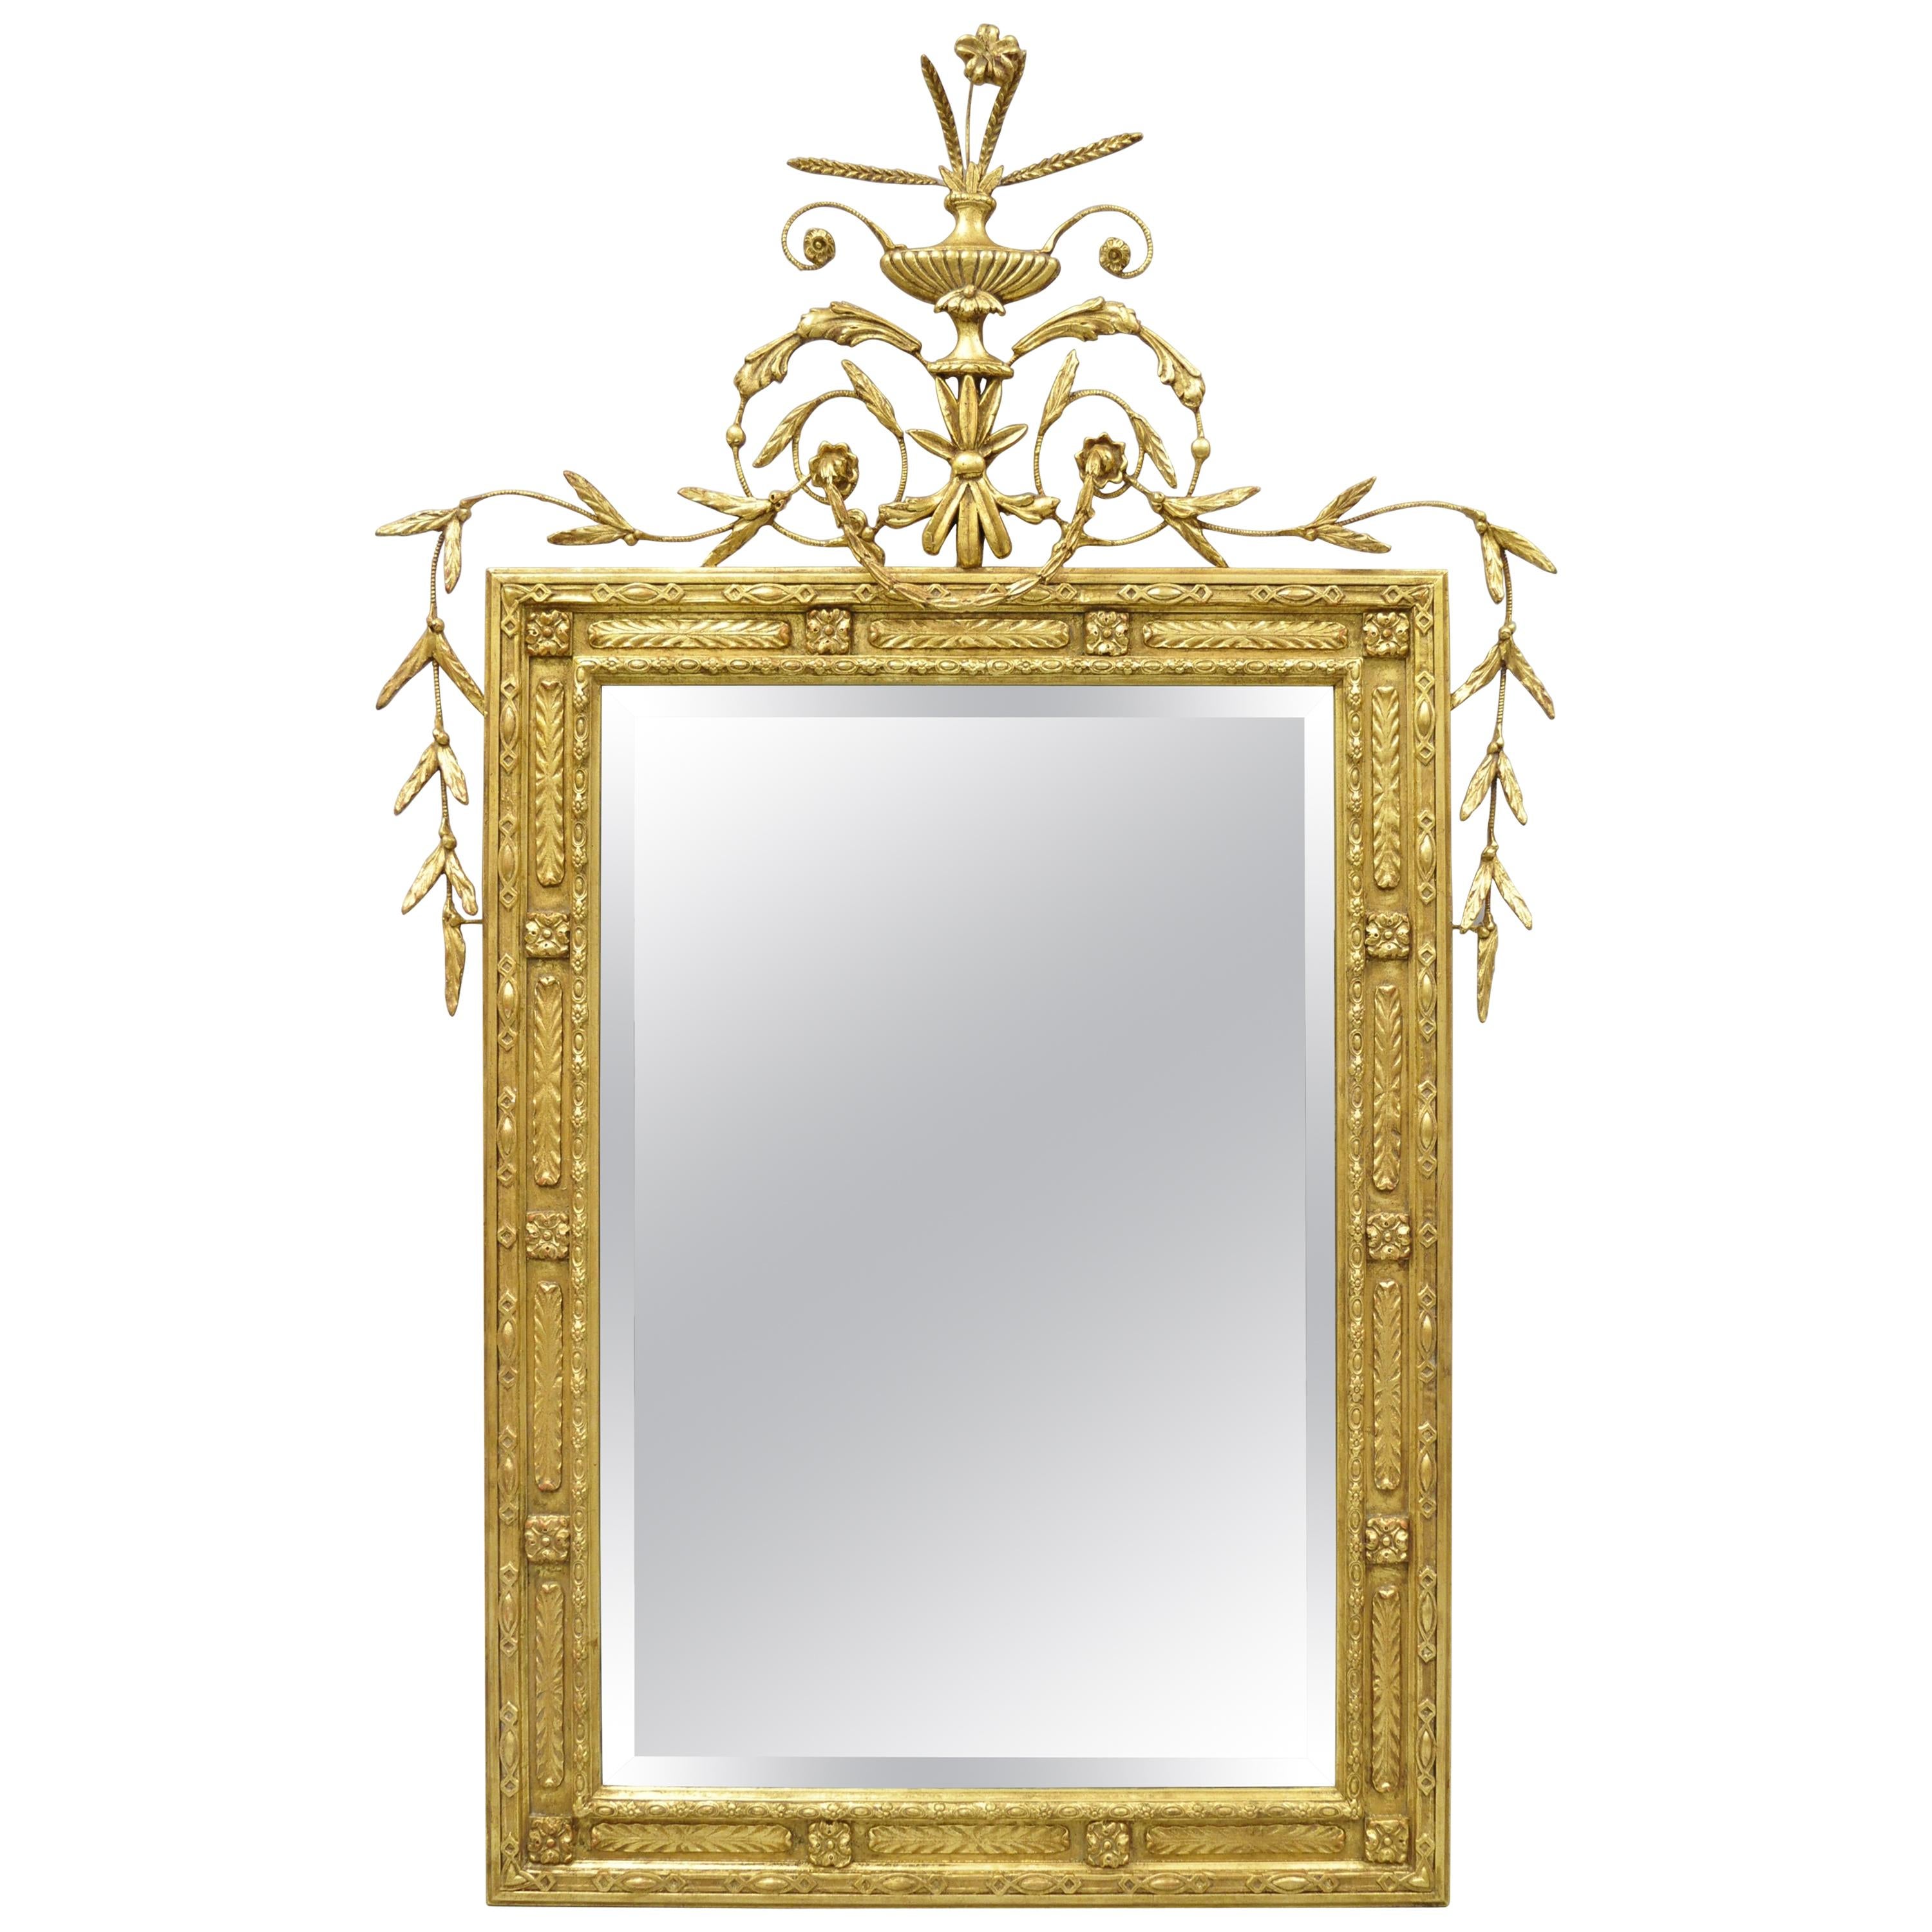 Friedman Brothers Large Gold Gilt Adams Style Beveled Mirror